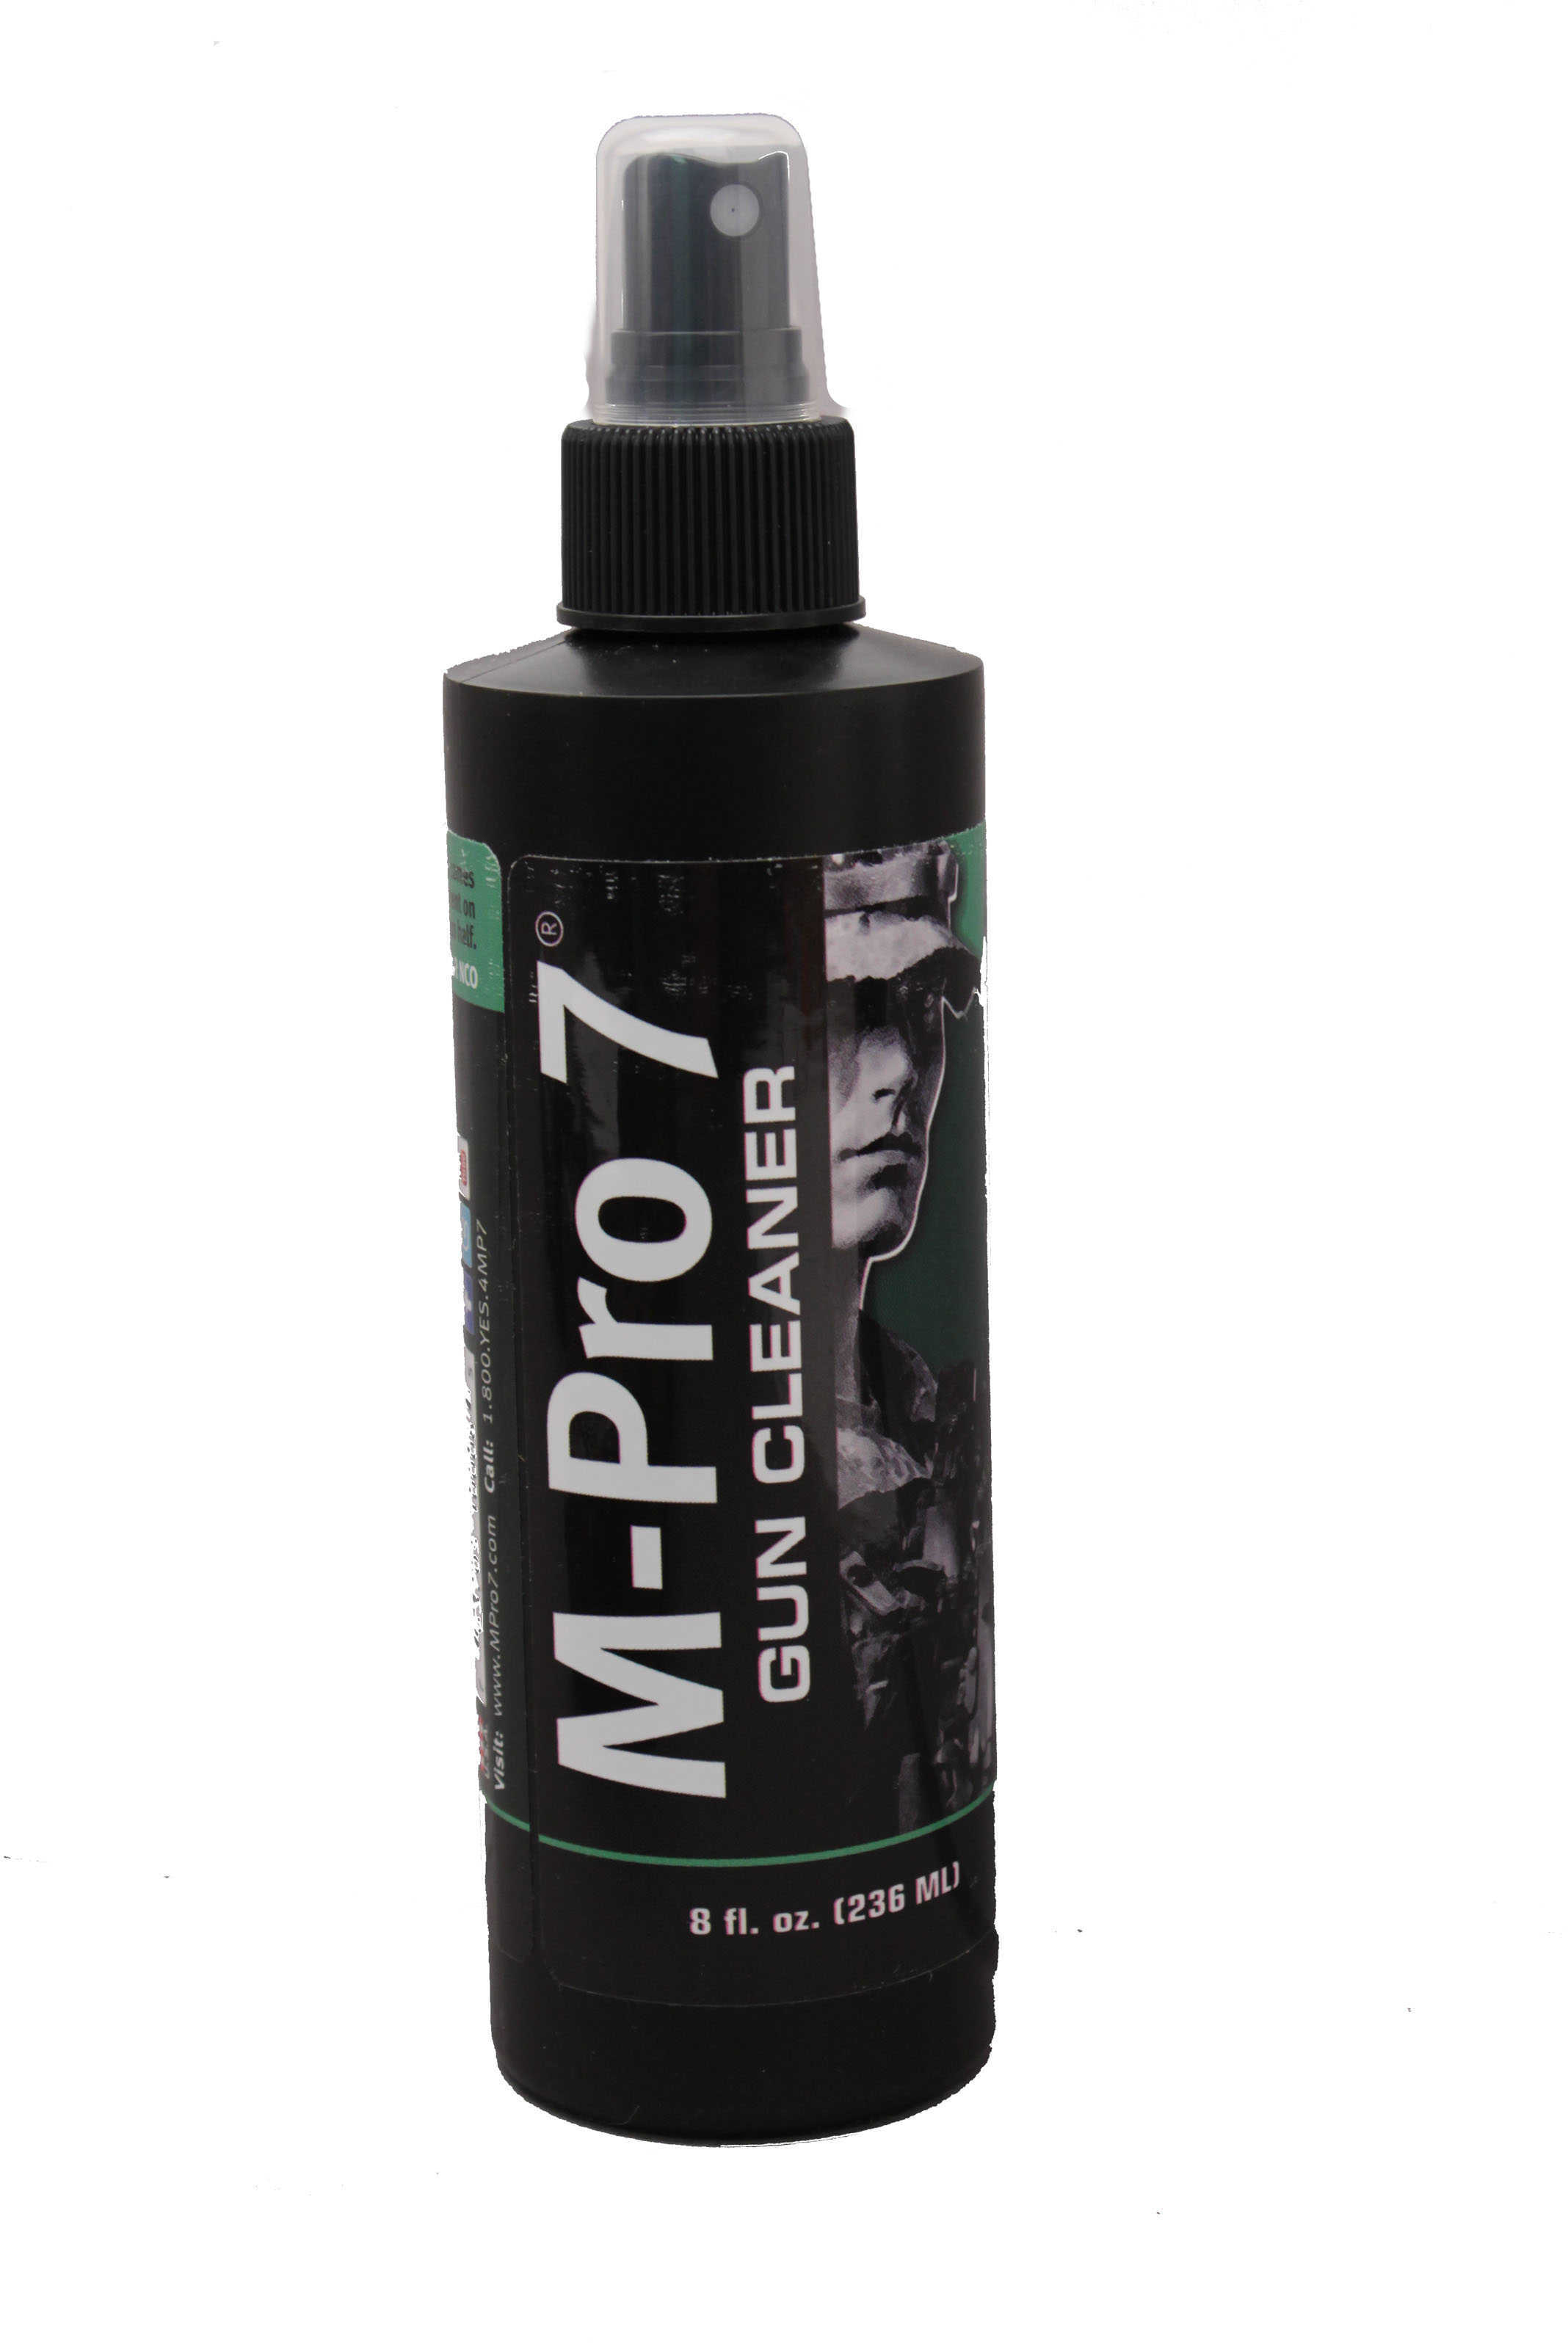 M-PRO 7 Gun Cleaner Liquid 8 oz. 12 Pack Bottle 070-1005